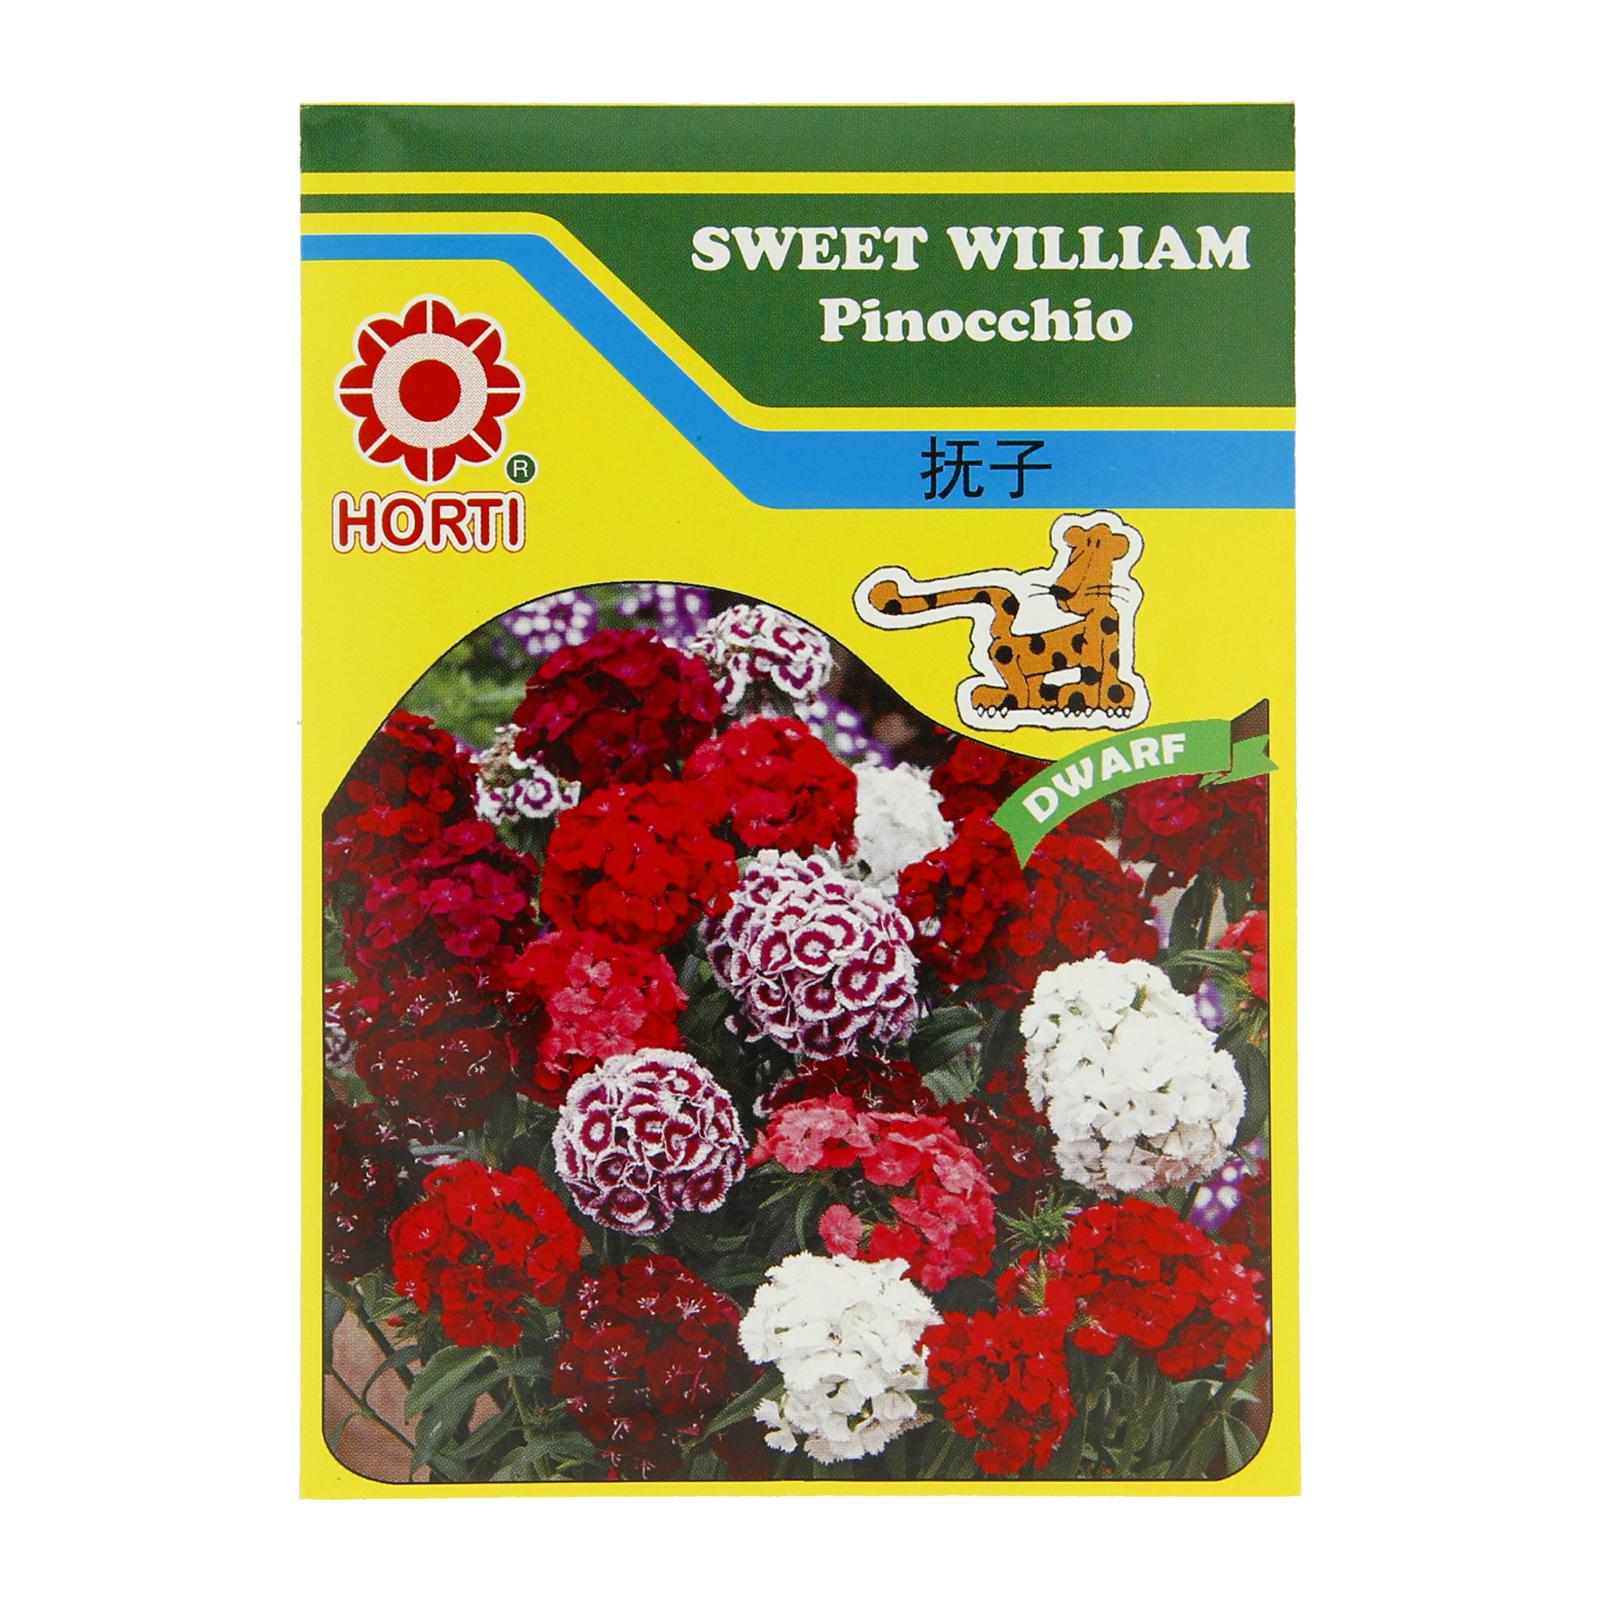 HORTI Sweet William Seeds